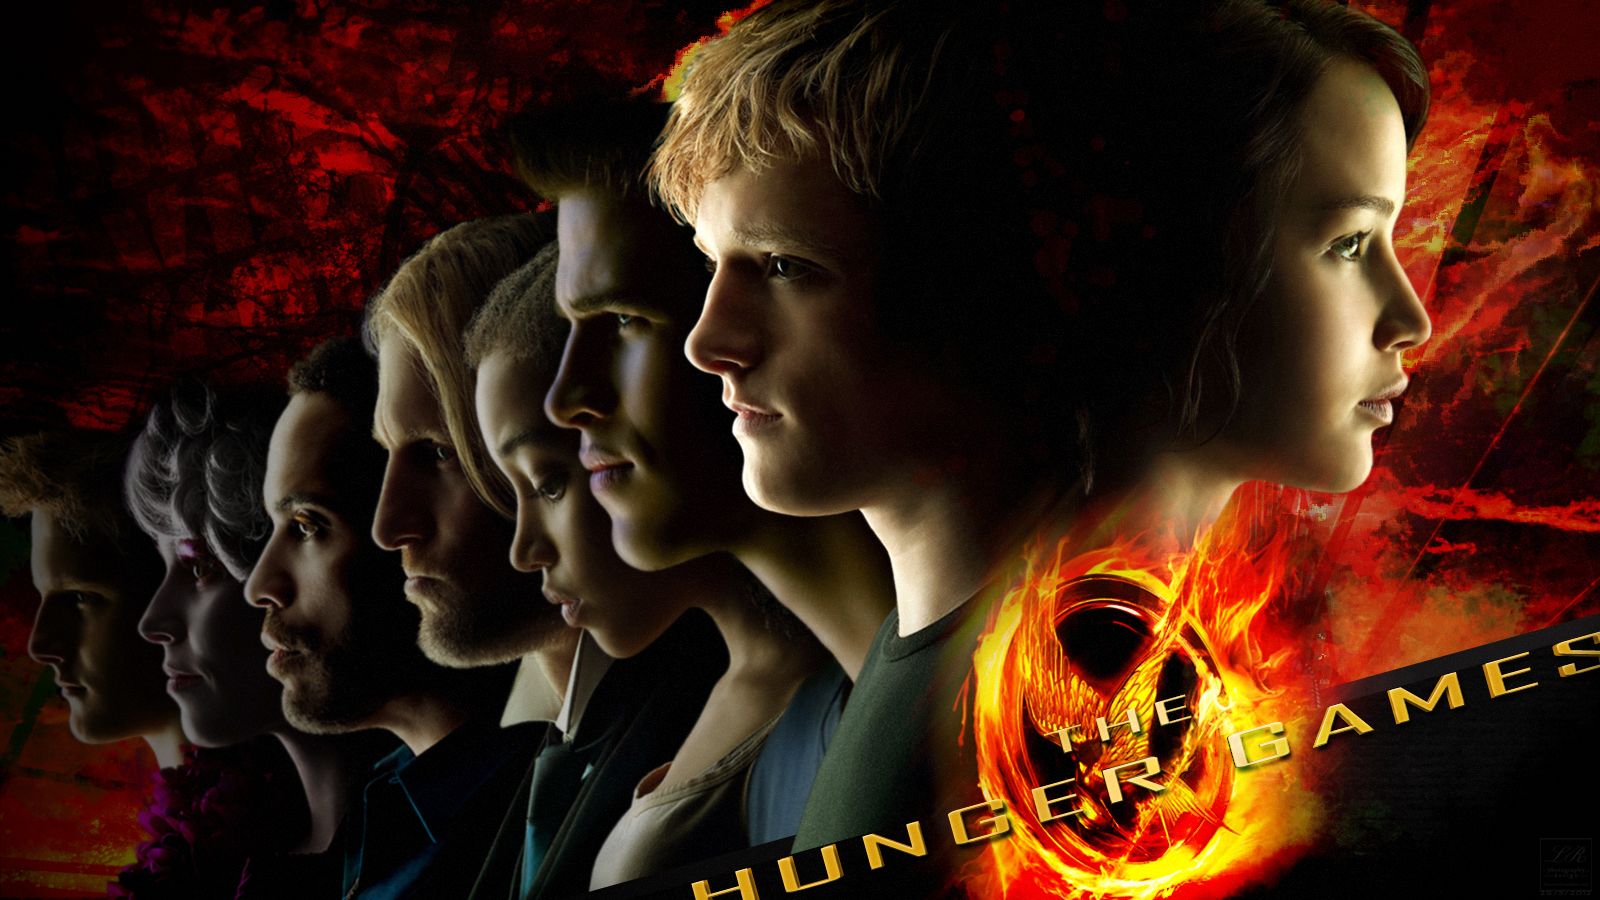 Hunger Games Wallpaper. The Hunger Games